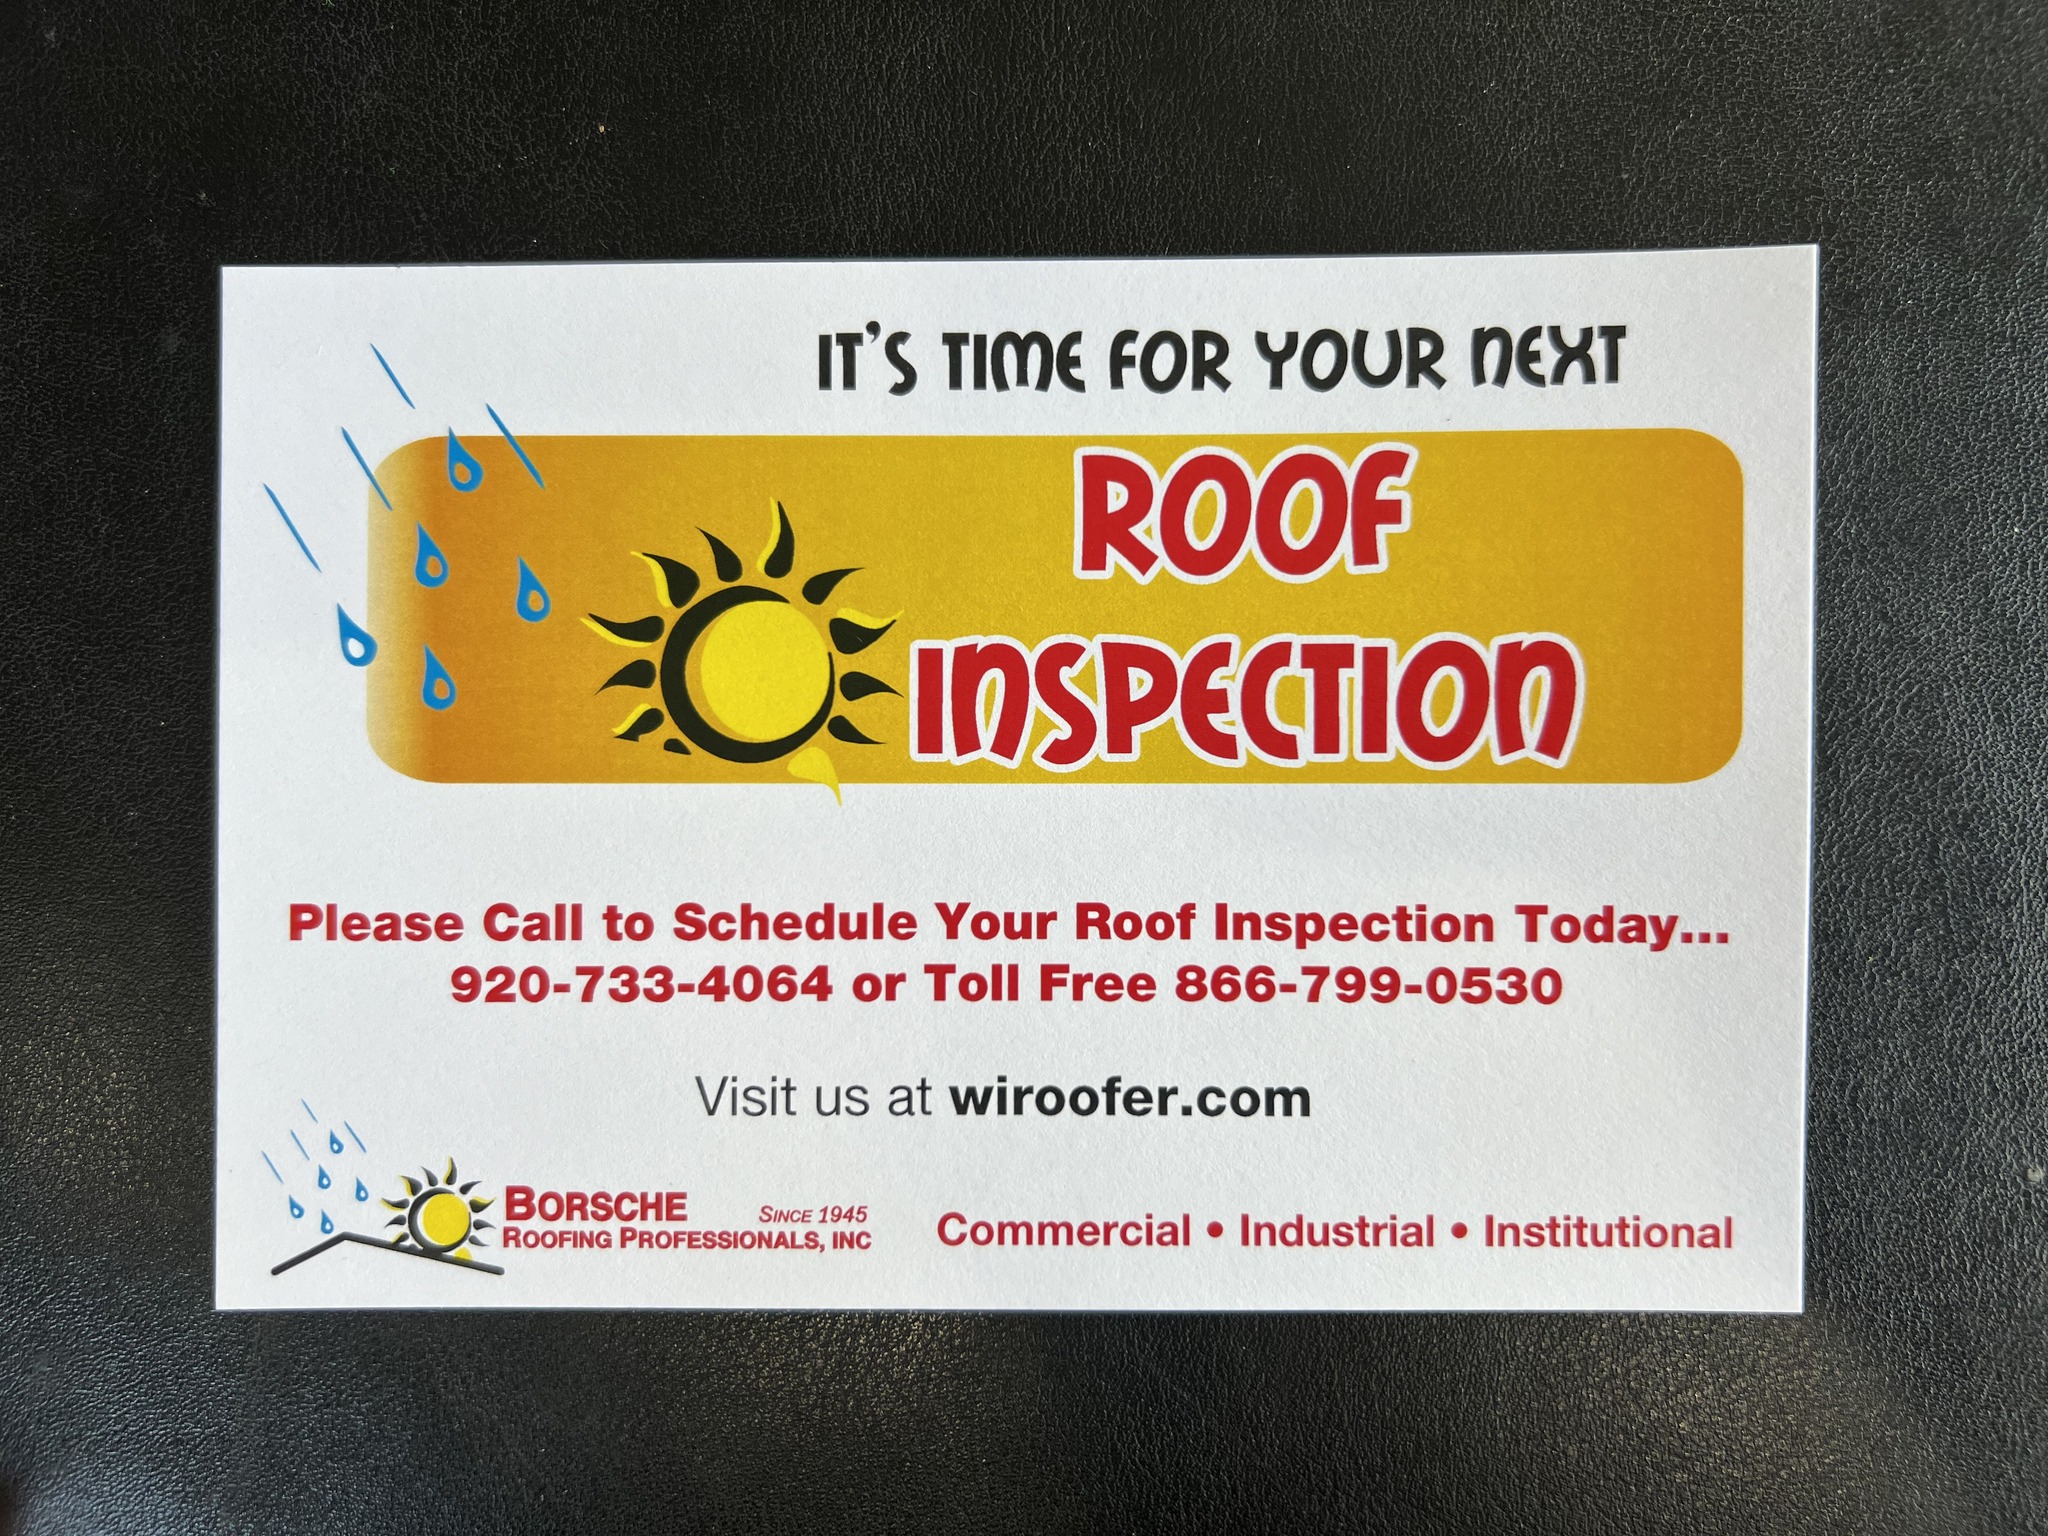 Borsche Roofing Professionals, Inc N2971 WI-15, Hortonville Wisconsin 54944